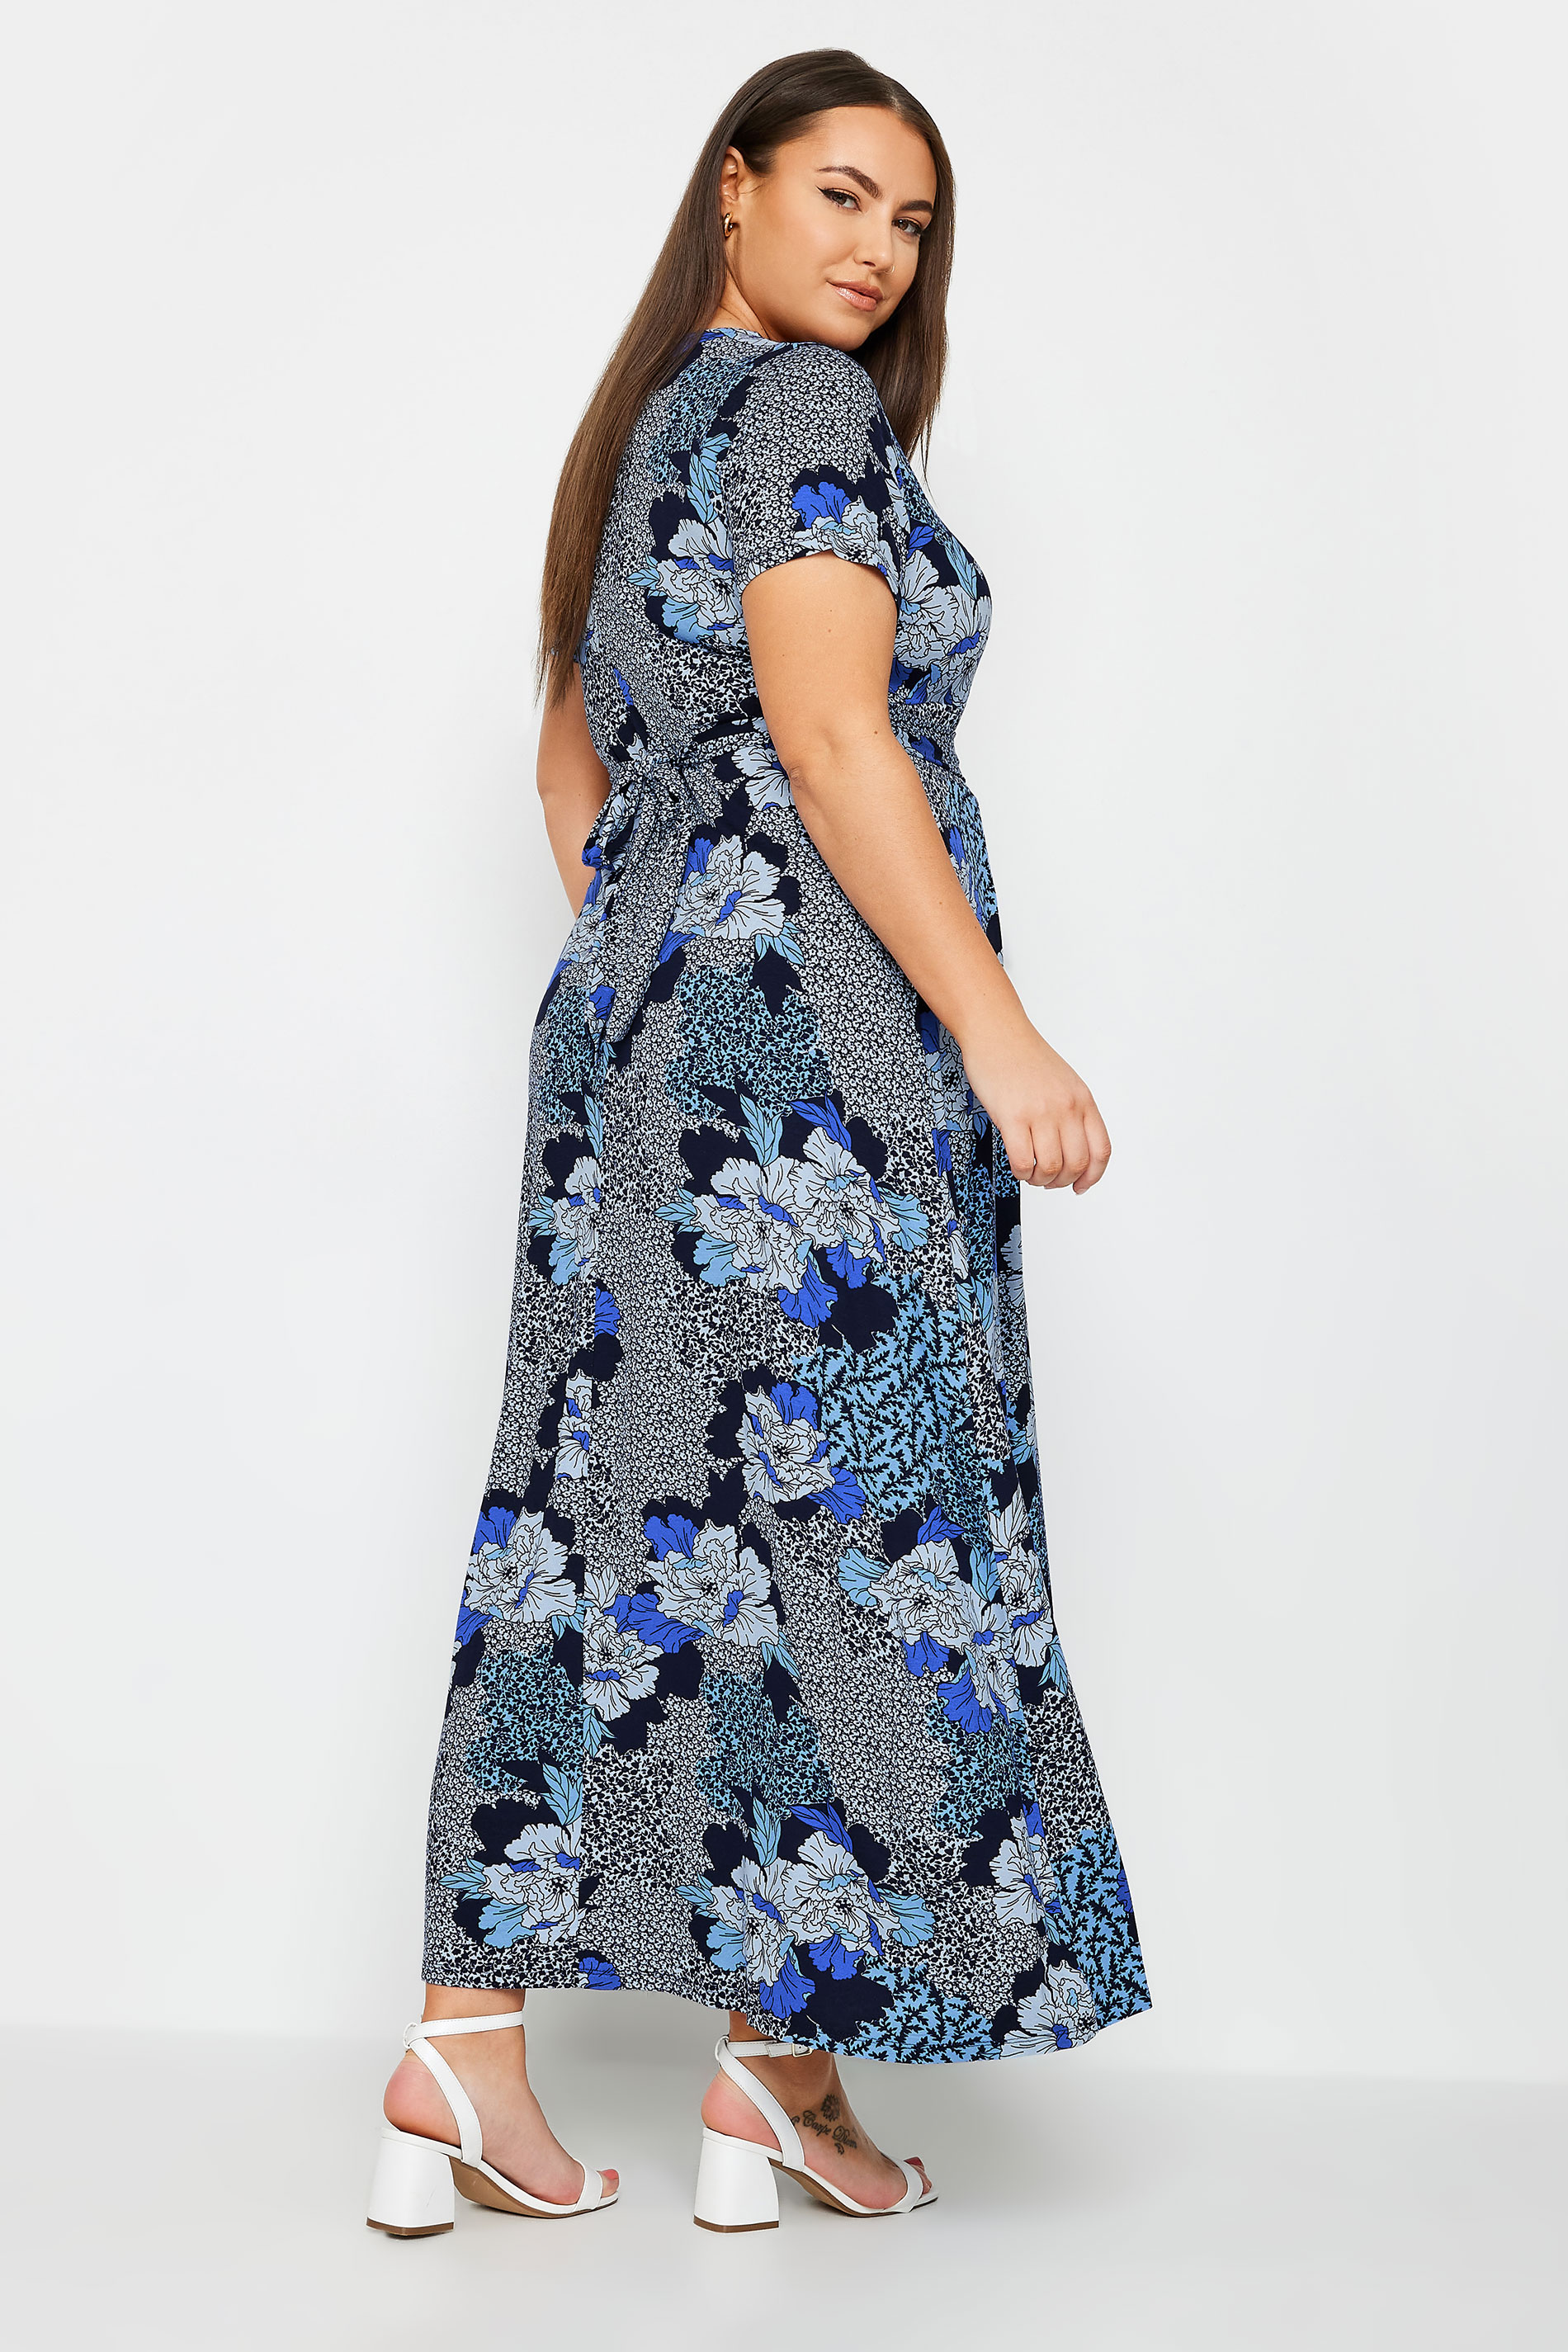 YOURS Plus Size Blue Floral Print Wrap Maxi Dress | Yours Clothing 3